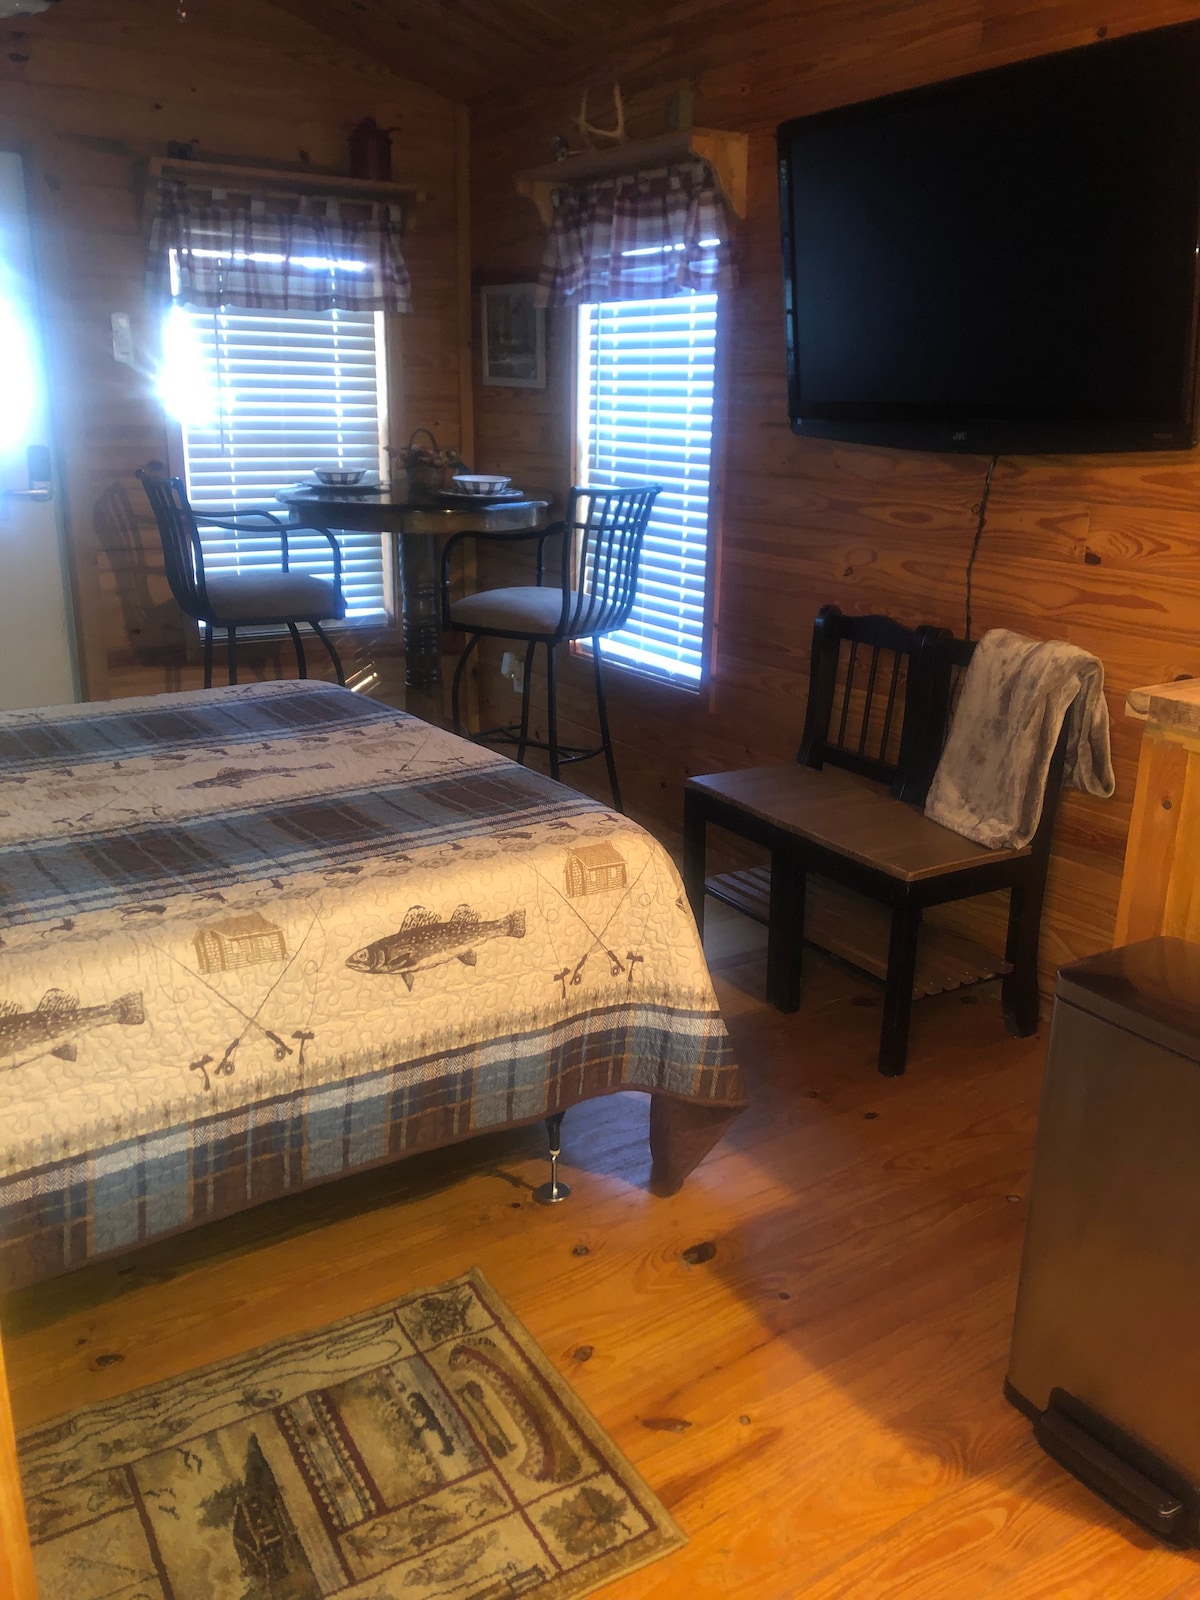 KT’s Cabin Tiny Home near the Suwannee River